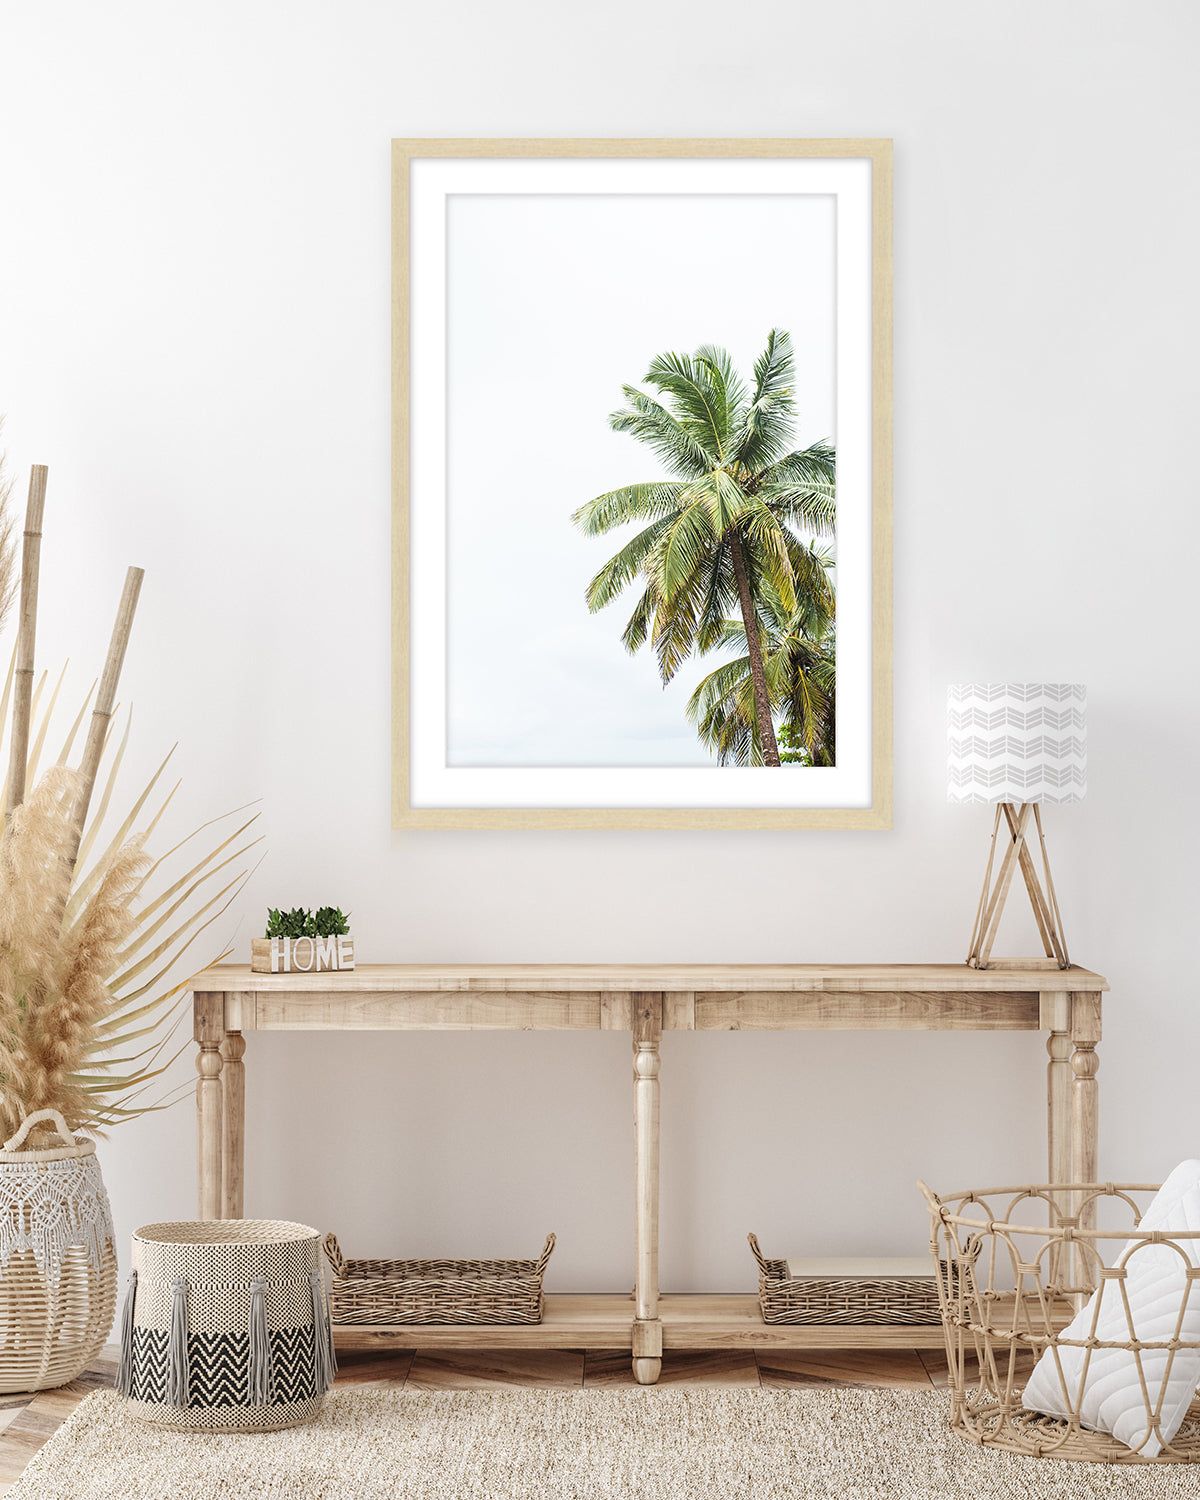 boho, coastal entryway decor featuring large palm tree photograph with wood frame